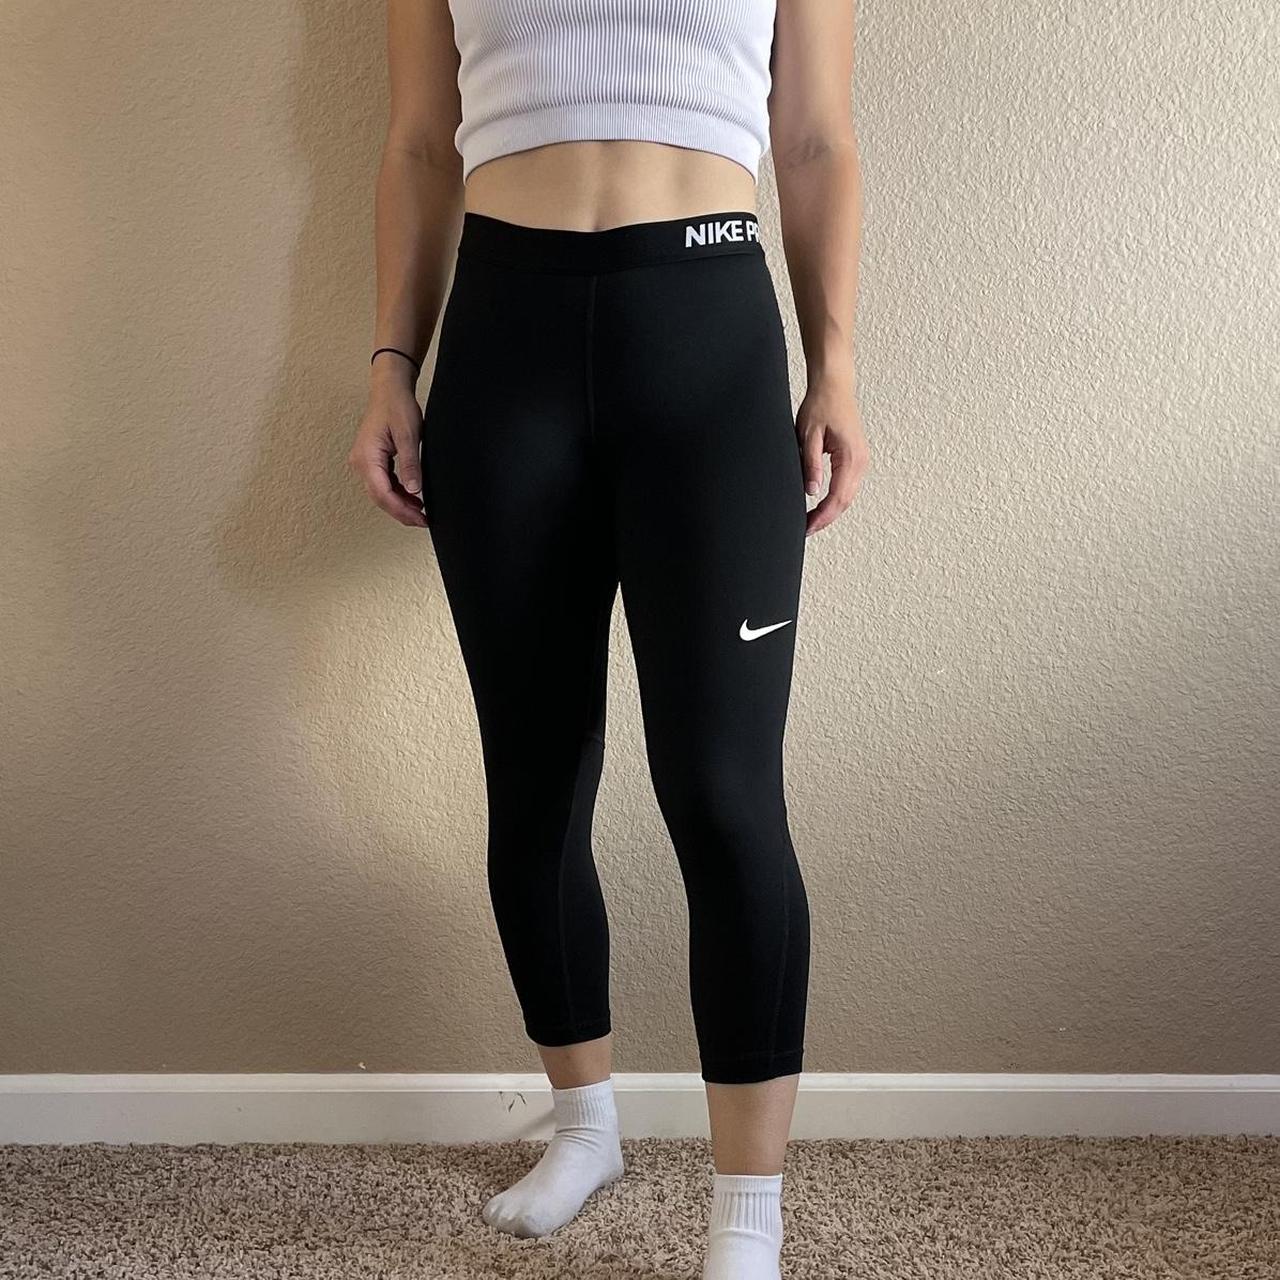 Black Nike Pro Leggings, Womens small. In good